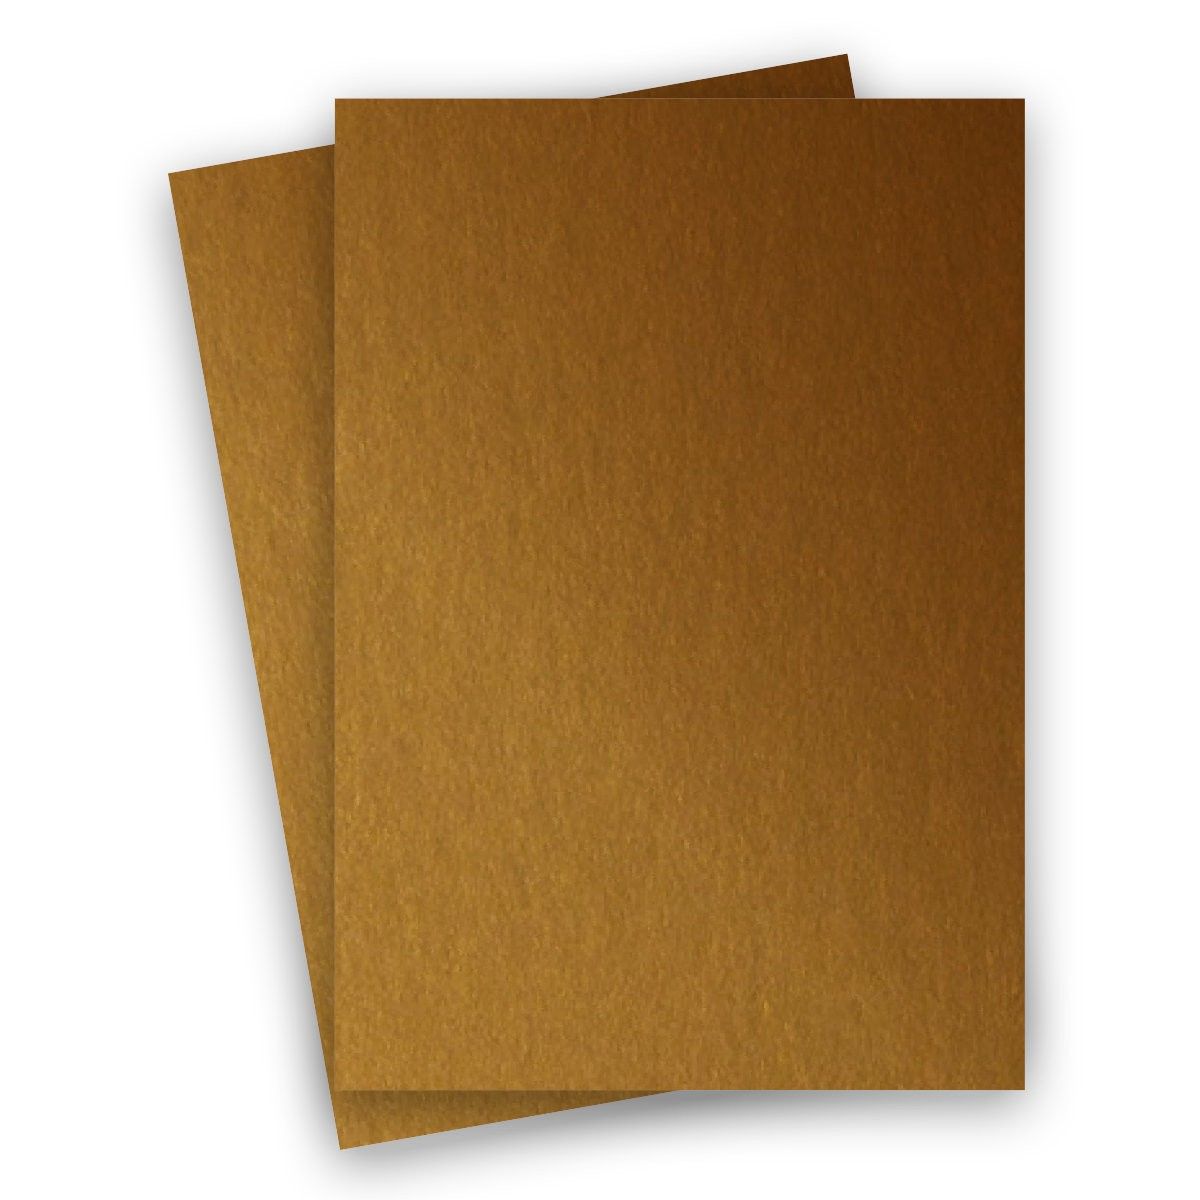 Metallic - 8.5X11 Card Stock Paper - ONYX - 105lb Cover (284gsm) - 1000 PK  - Stardream Paper